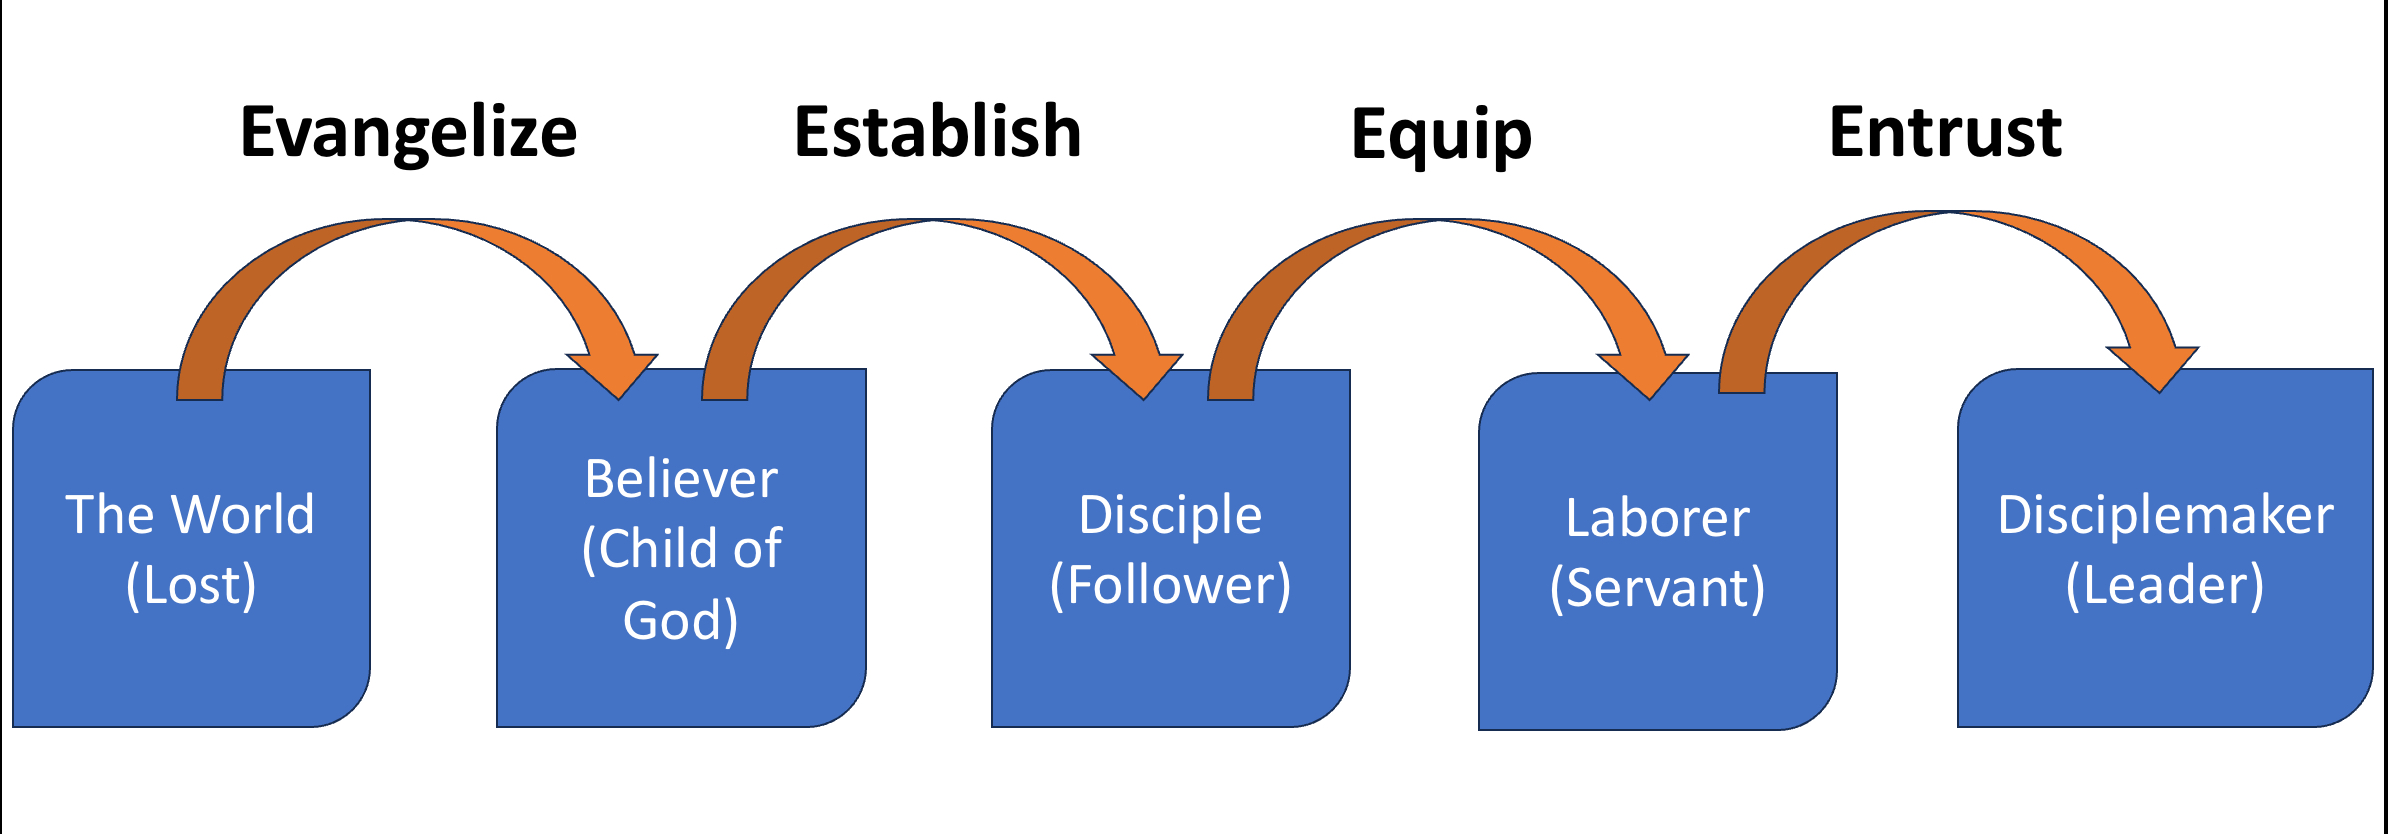 Evangelize, establish, equip, entrust